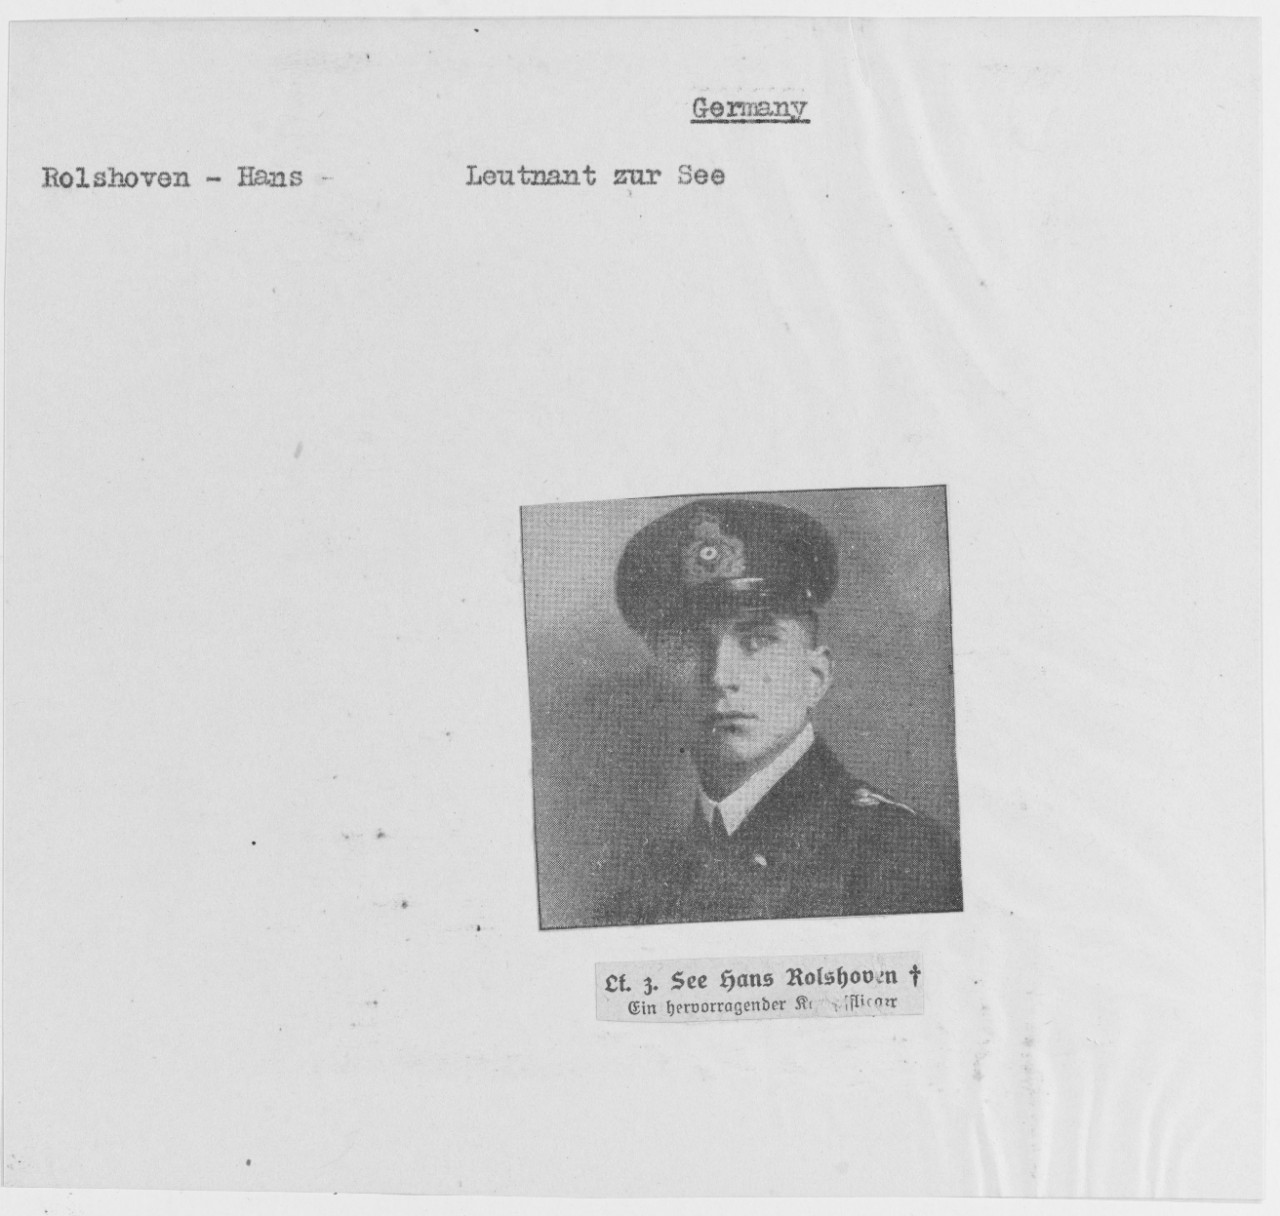 Leutnant Hans Rolshoven, German Submarine Commander